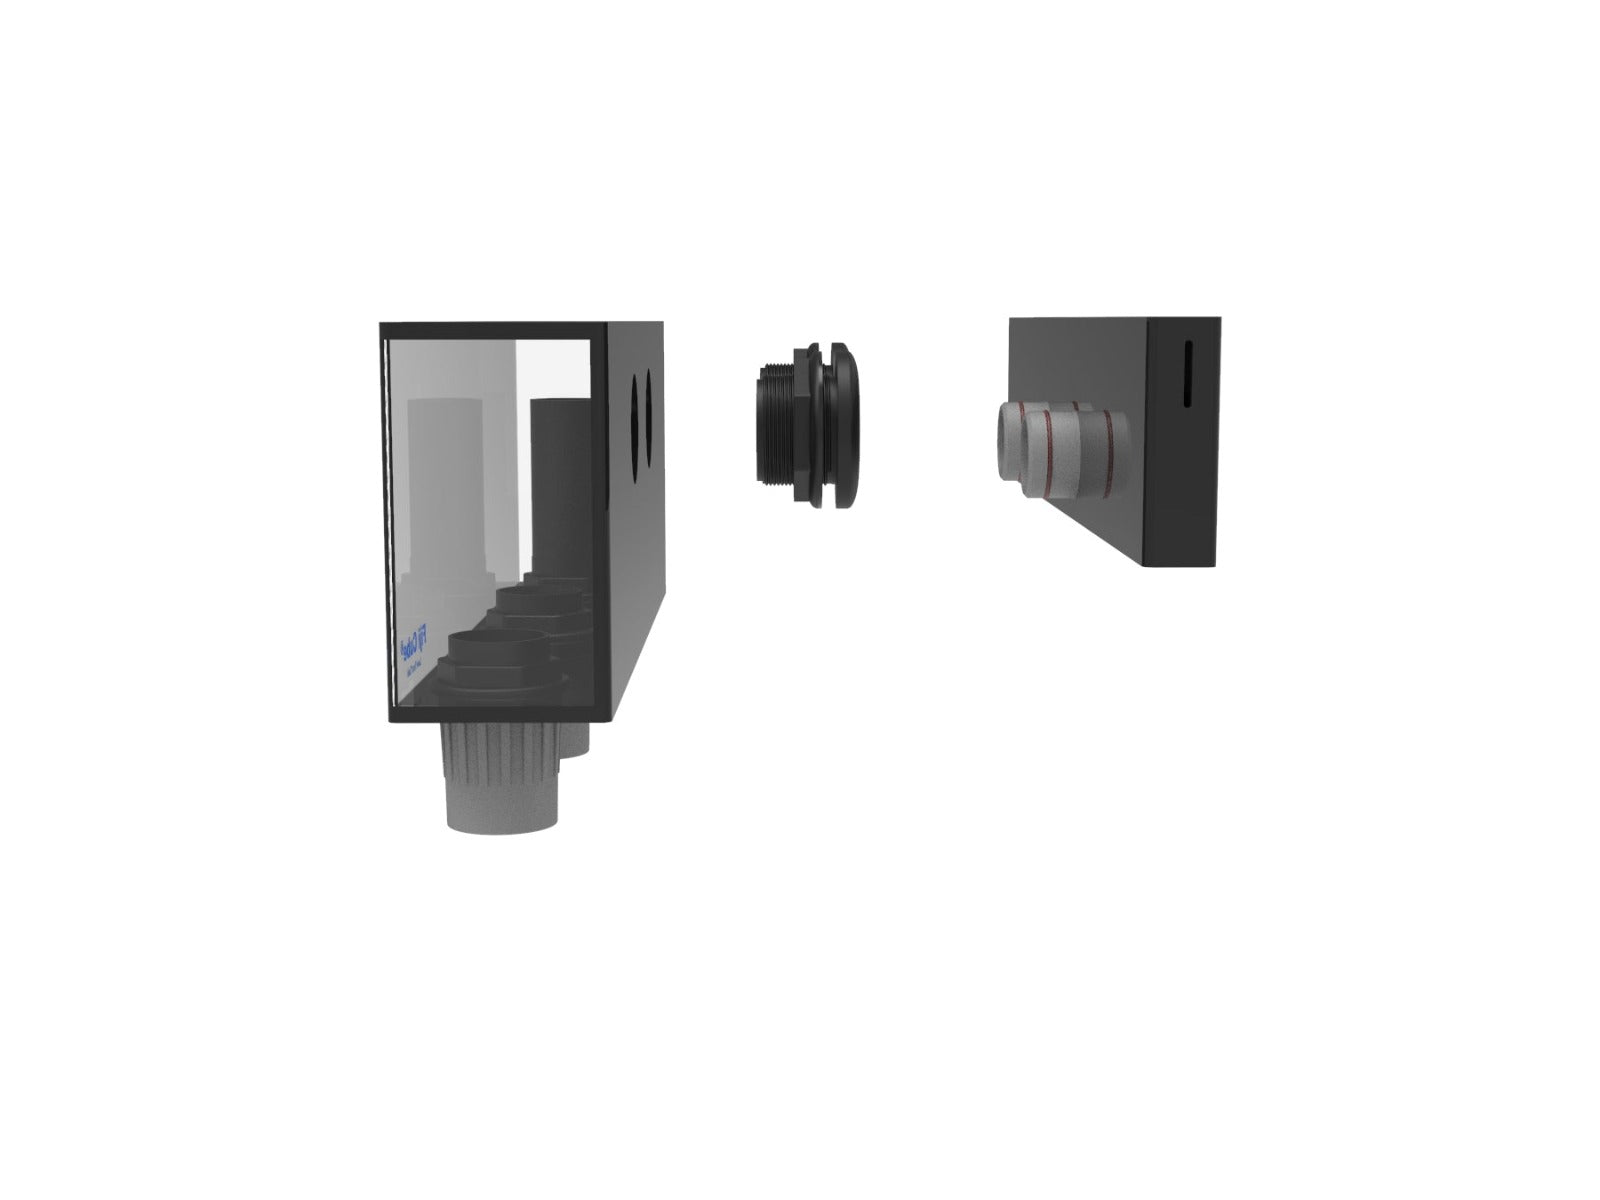 Fiji Cube Low Profile External Overflow Box - 800 GPH